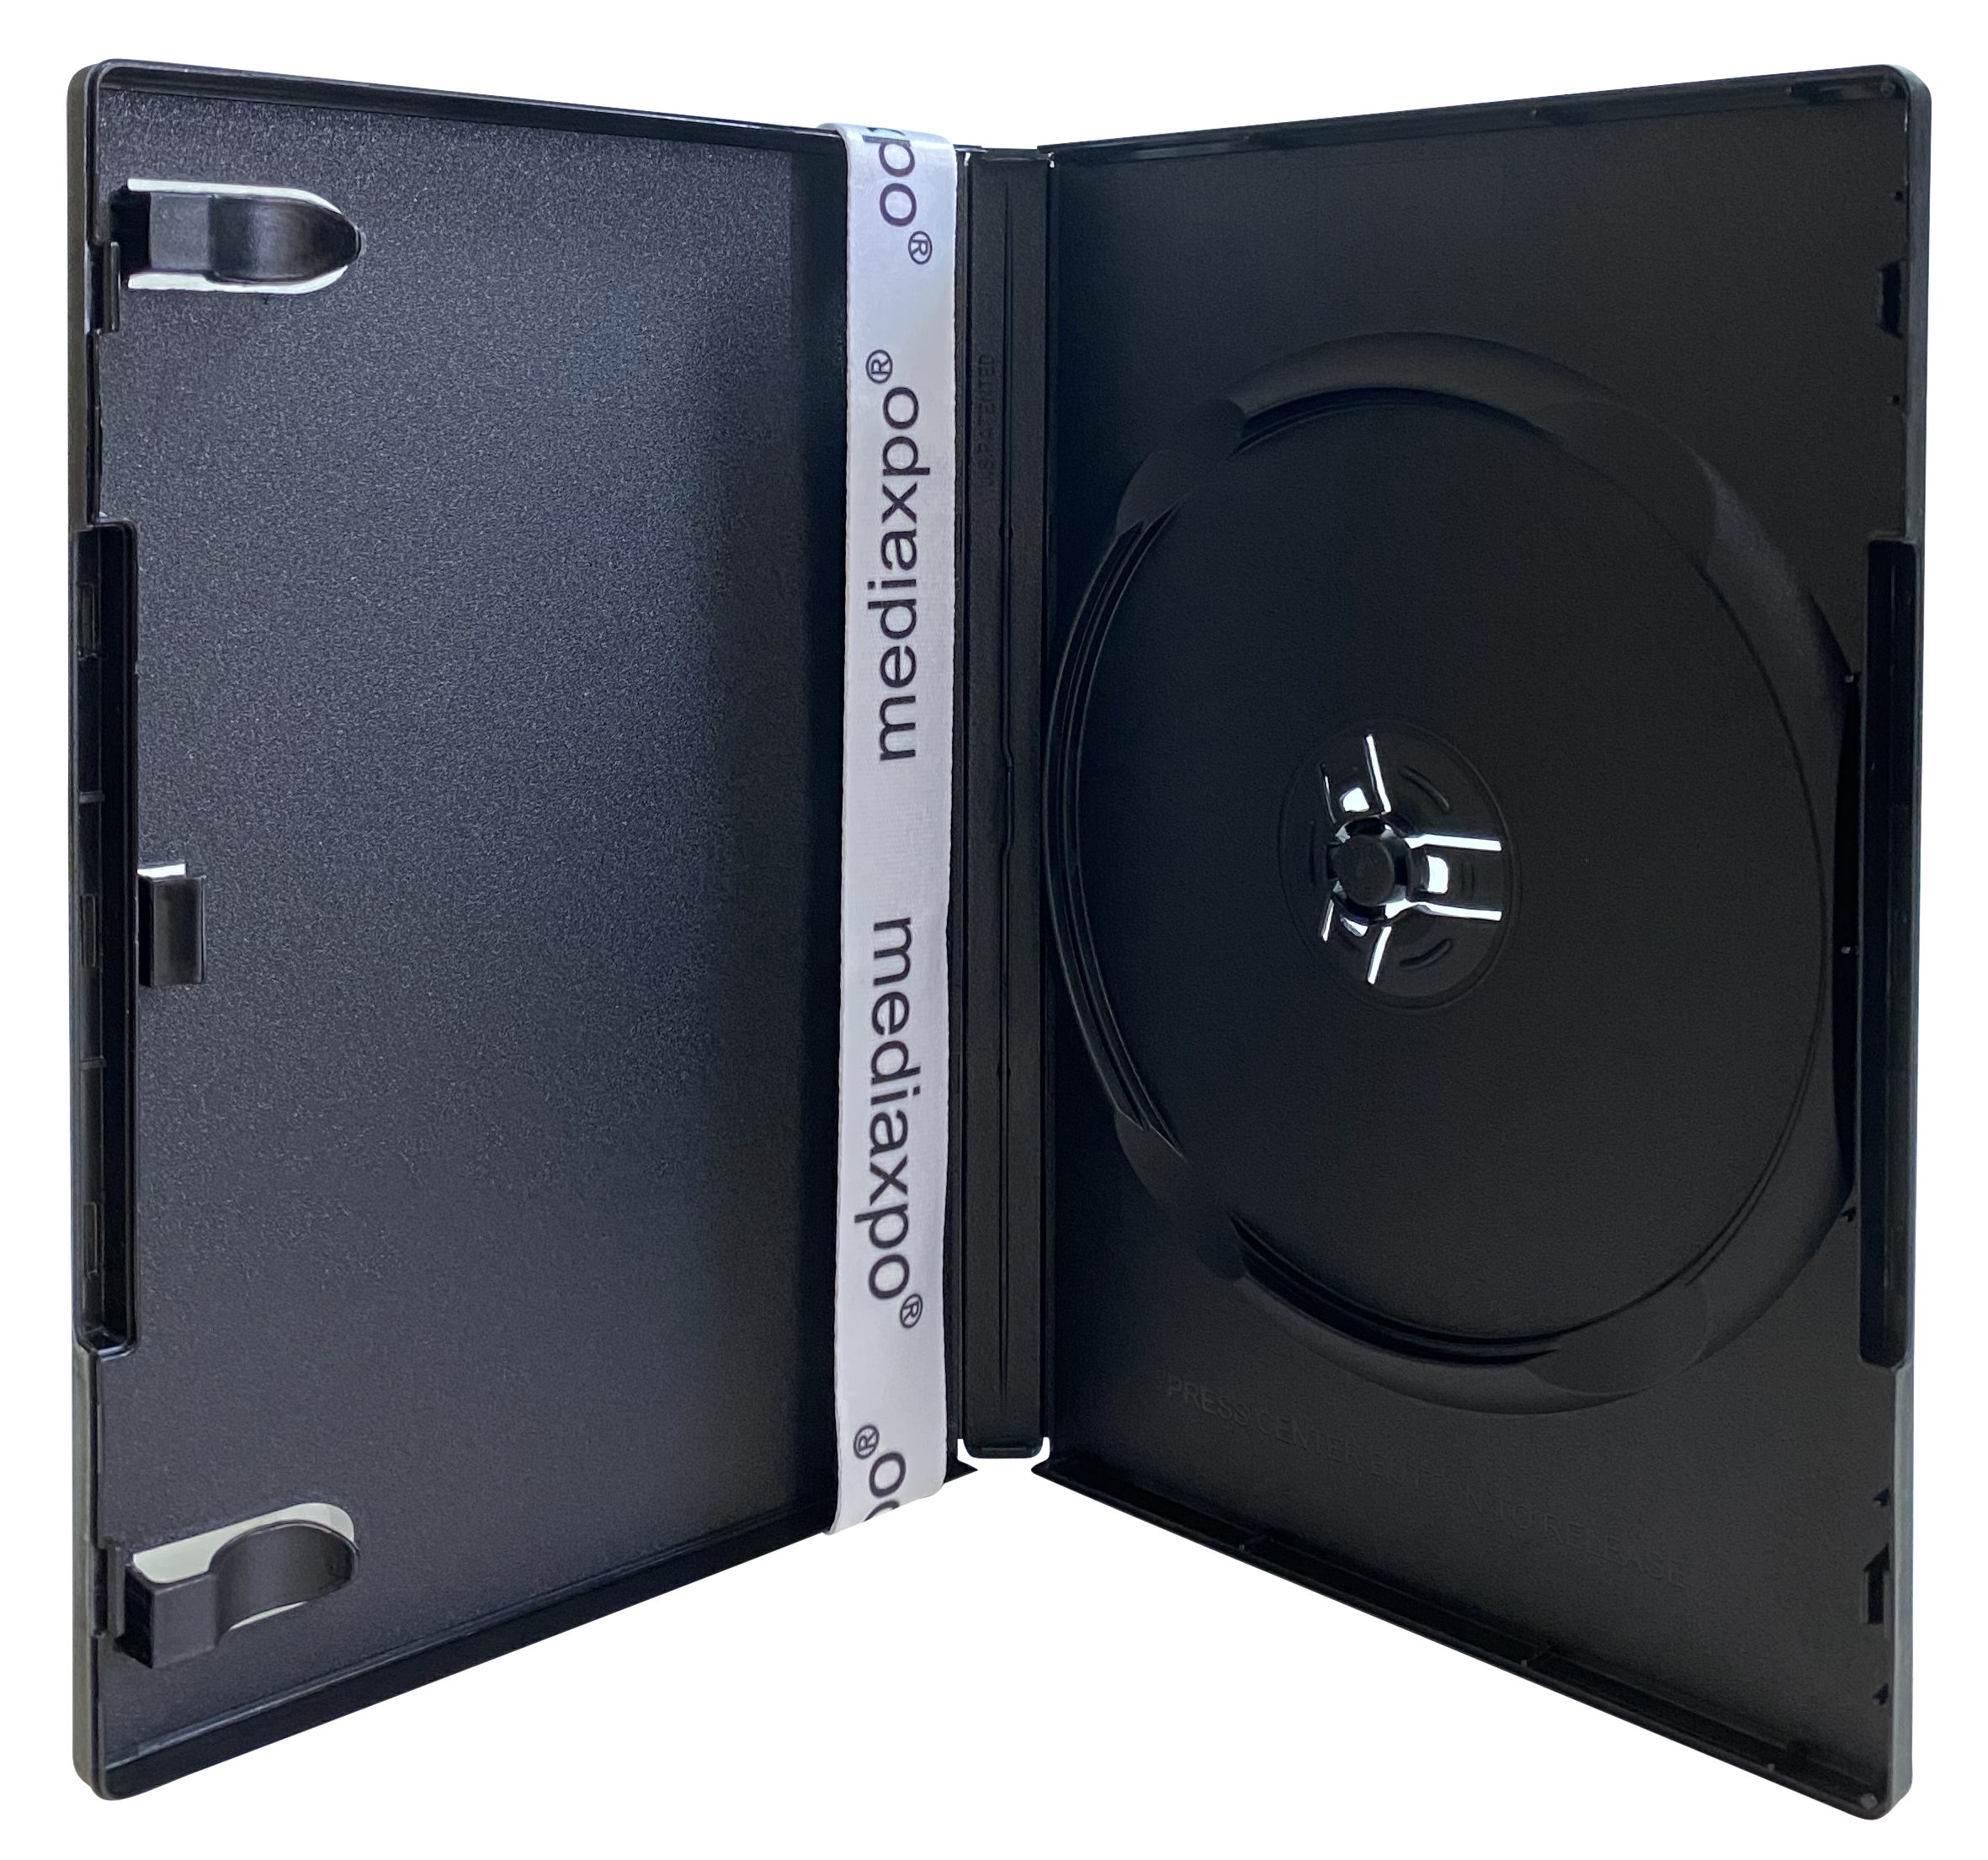 Generic 400 PREMIUM STANDARD Black Single DVD Cases 14MM (100% New Material)